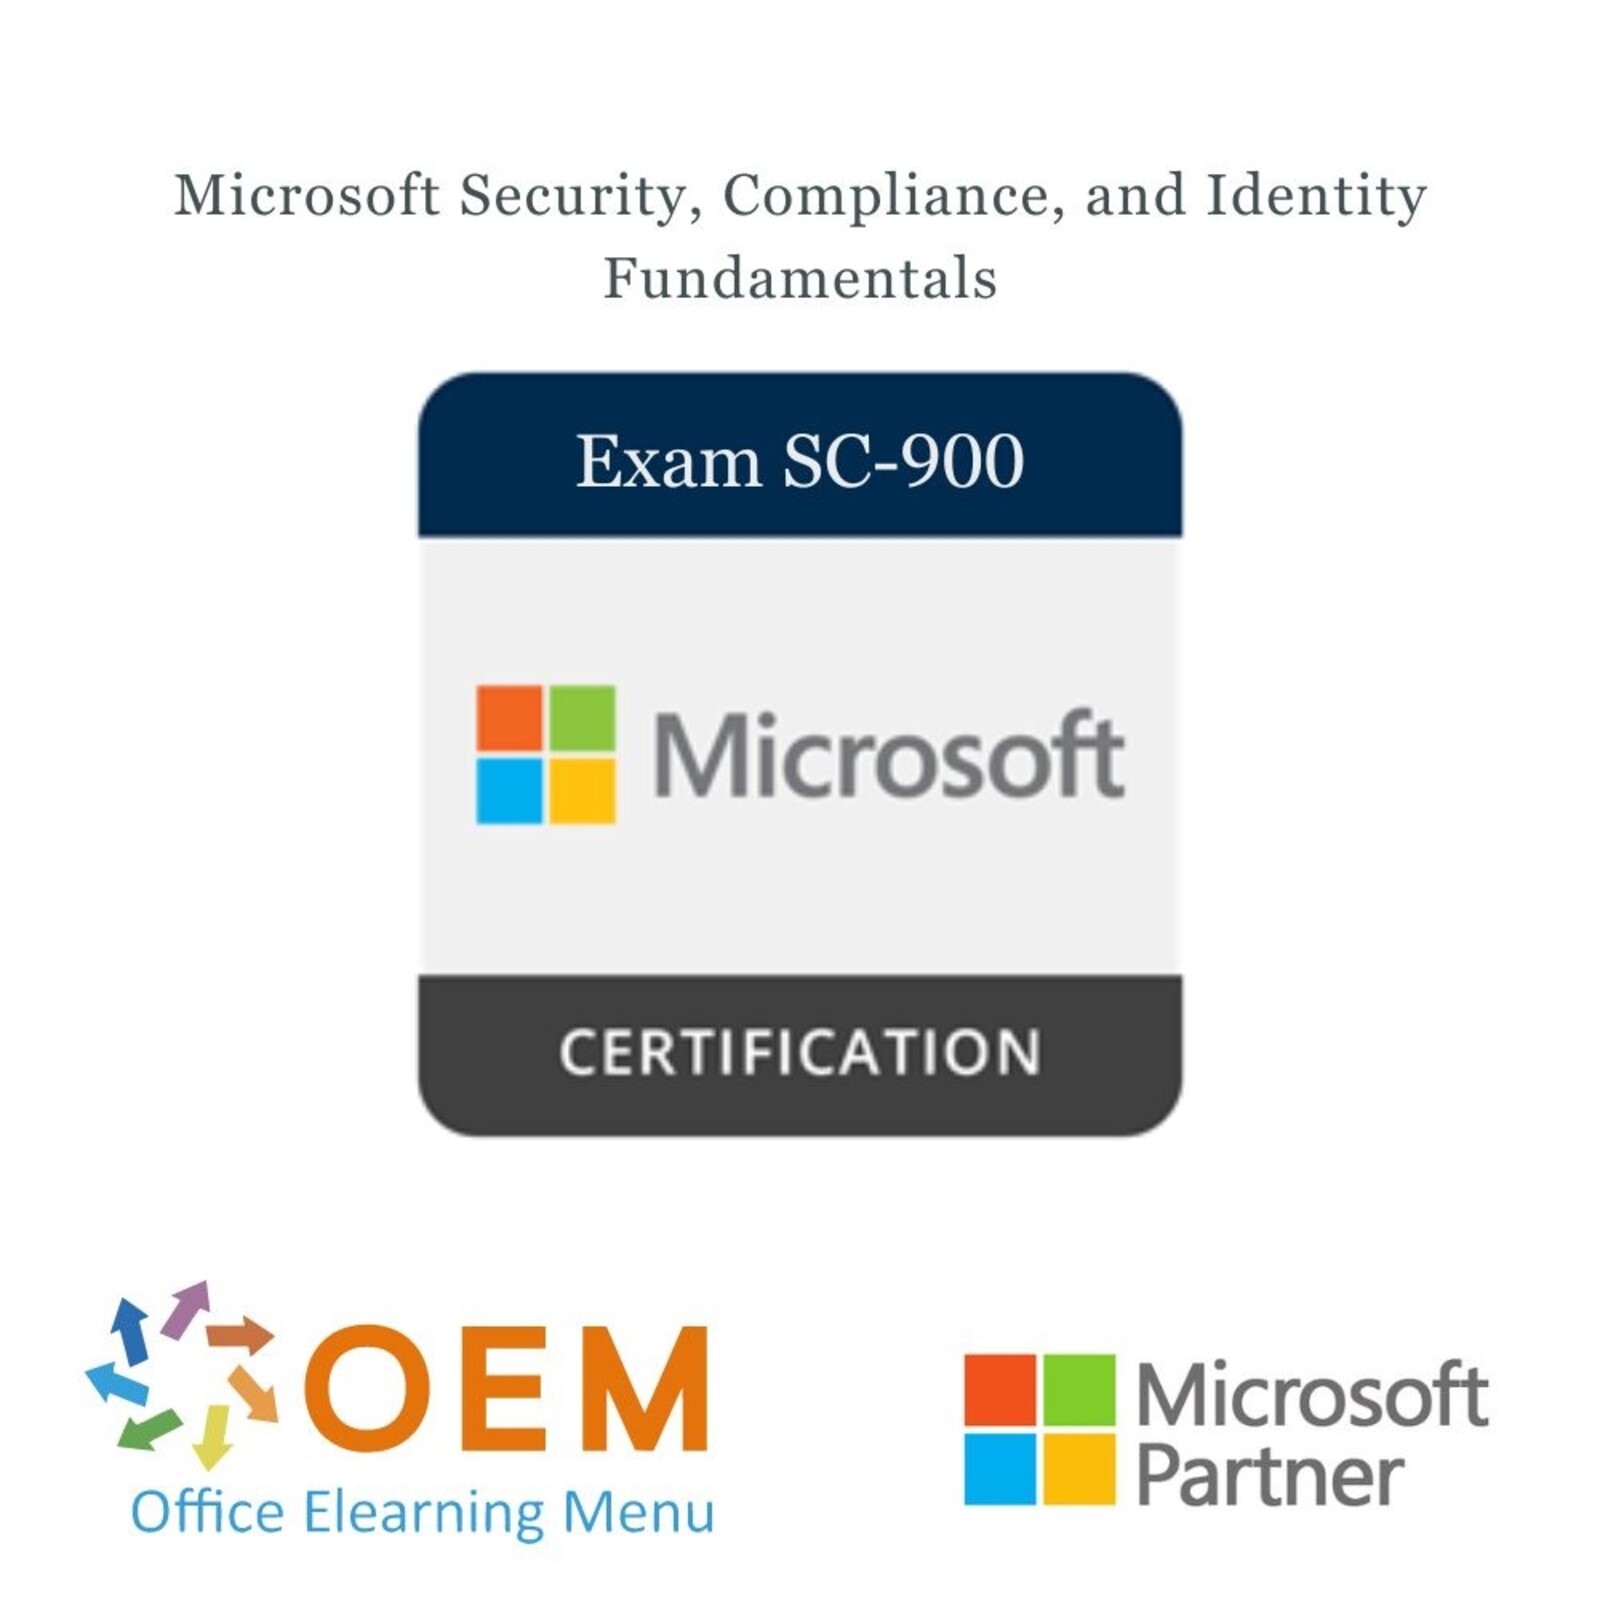 Certiport - Pearson Vue Examen SC-900 Microsoft Security, Compliance, and Identity Fundamentals